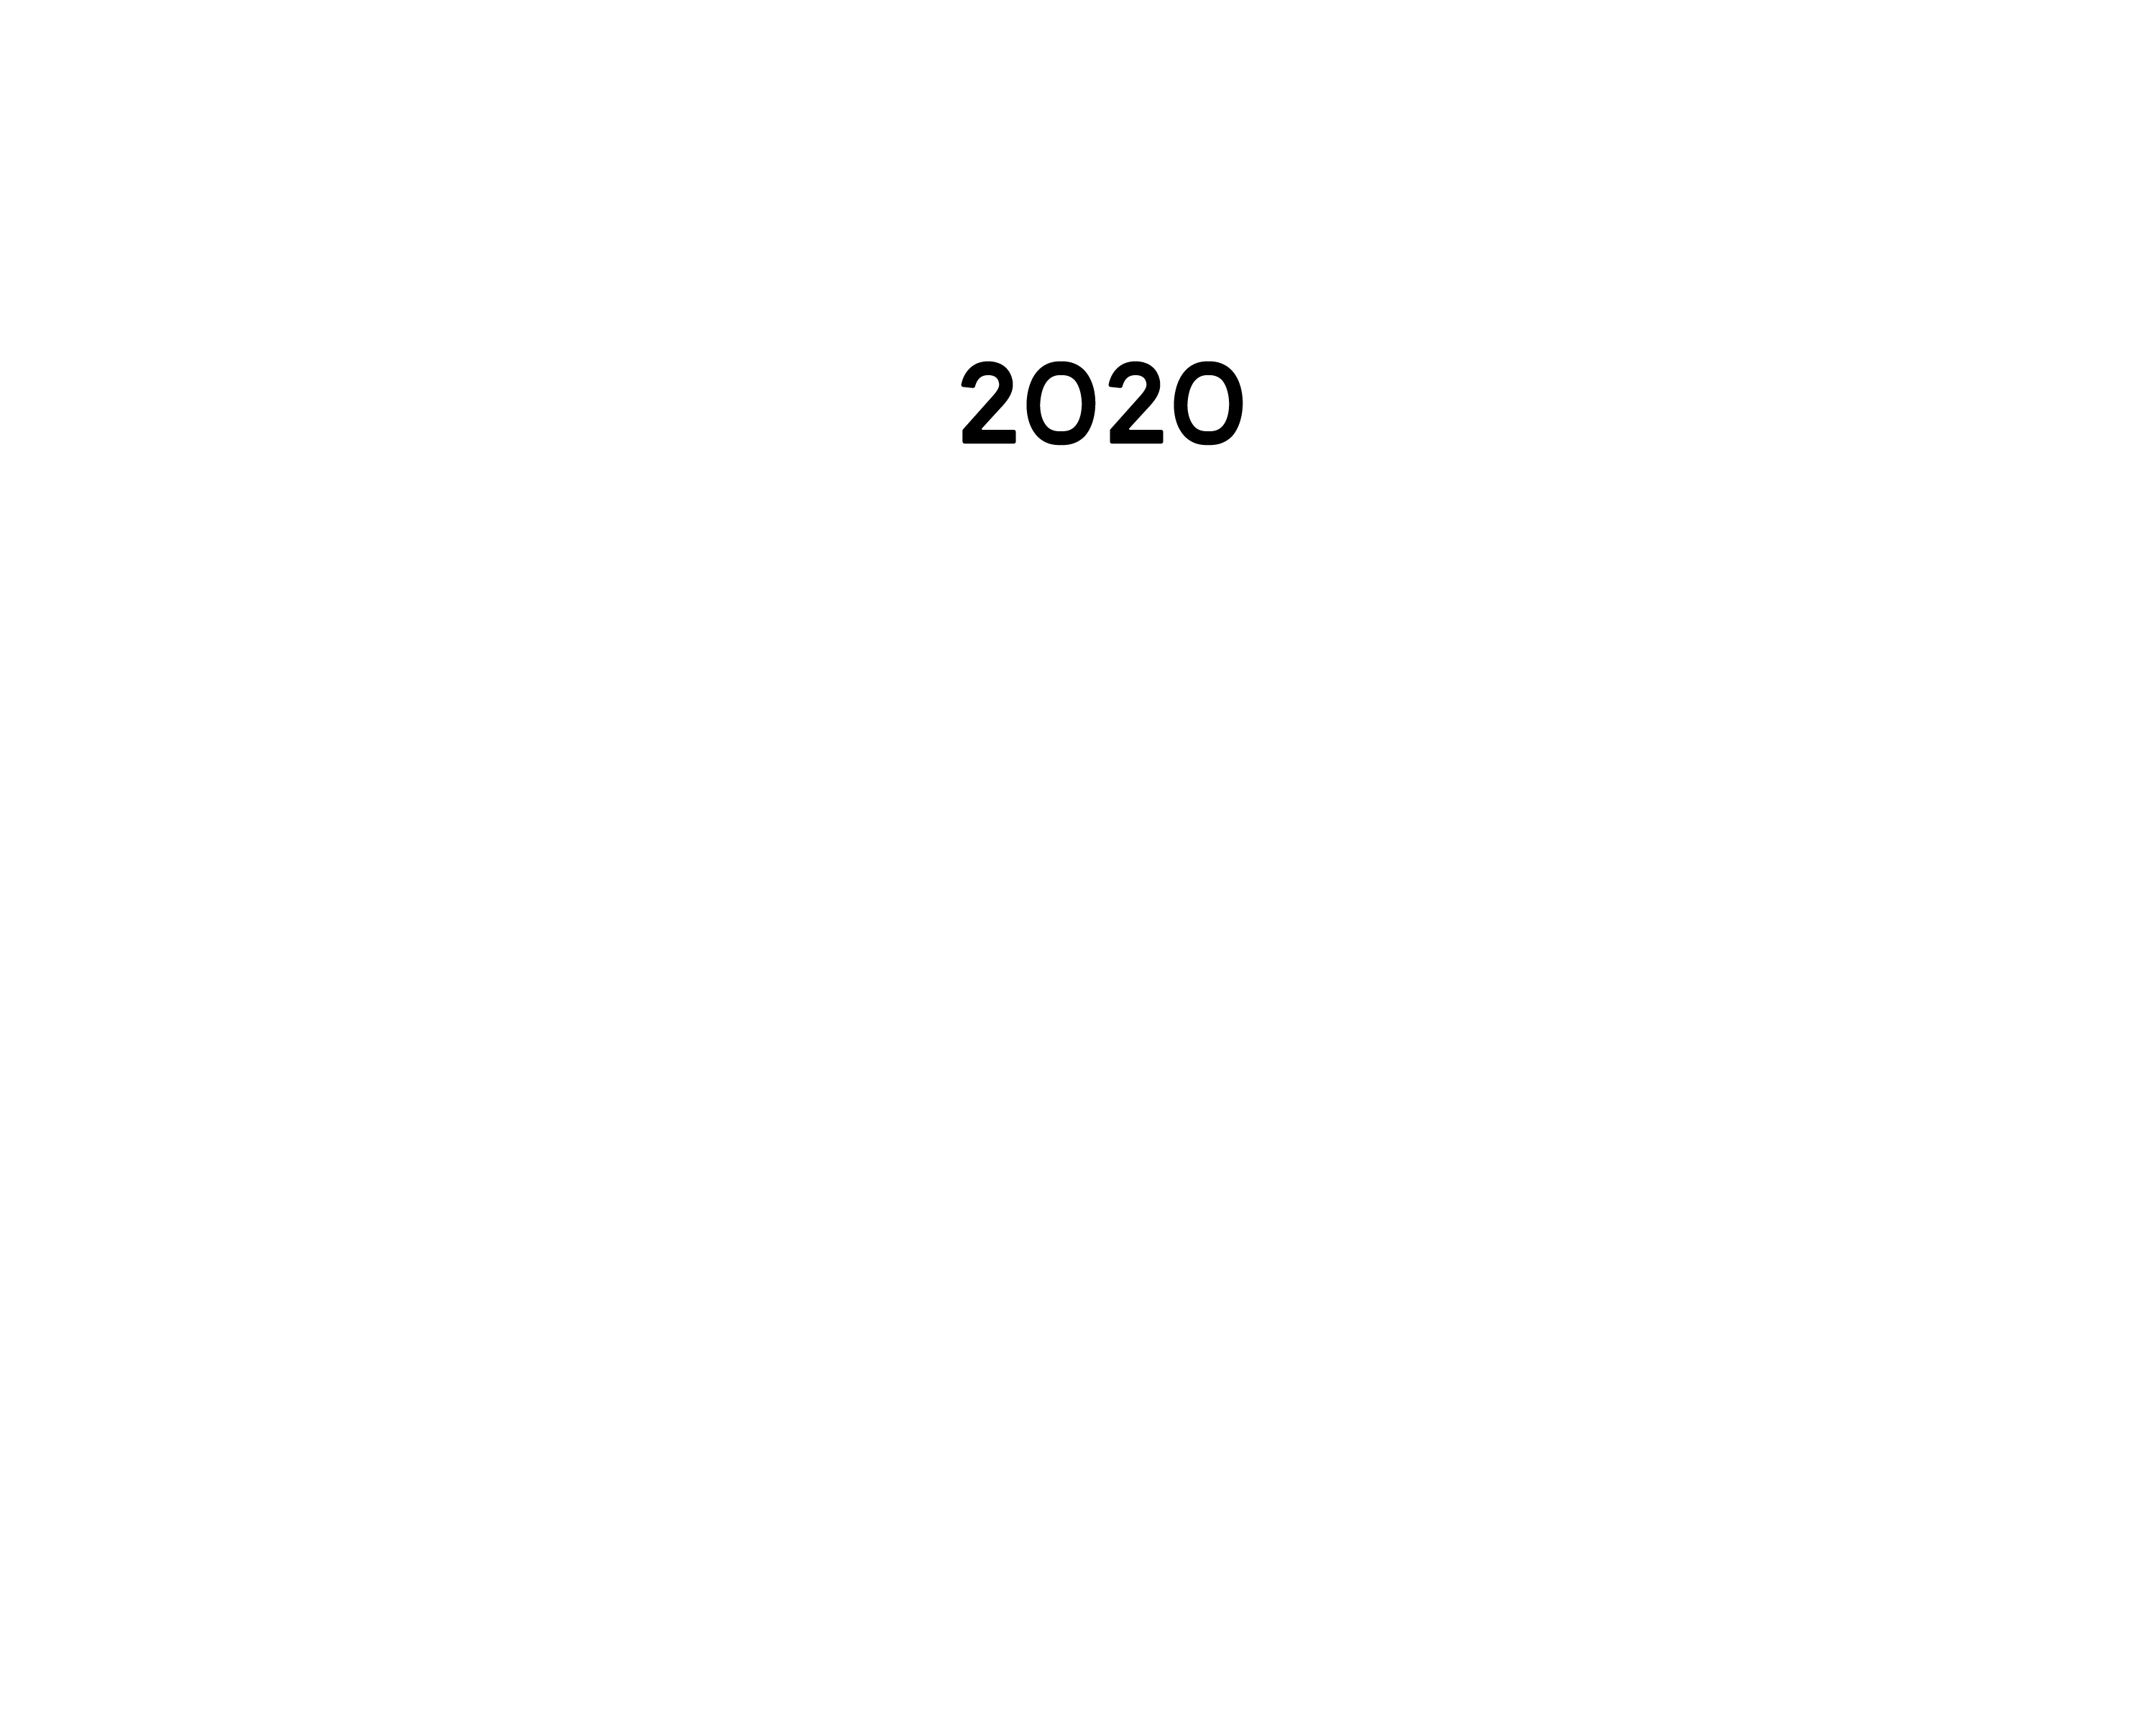 TennisS - Tennis Apparel & More